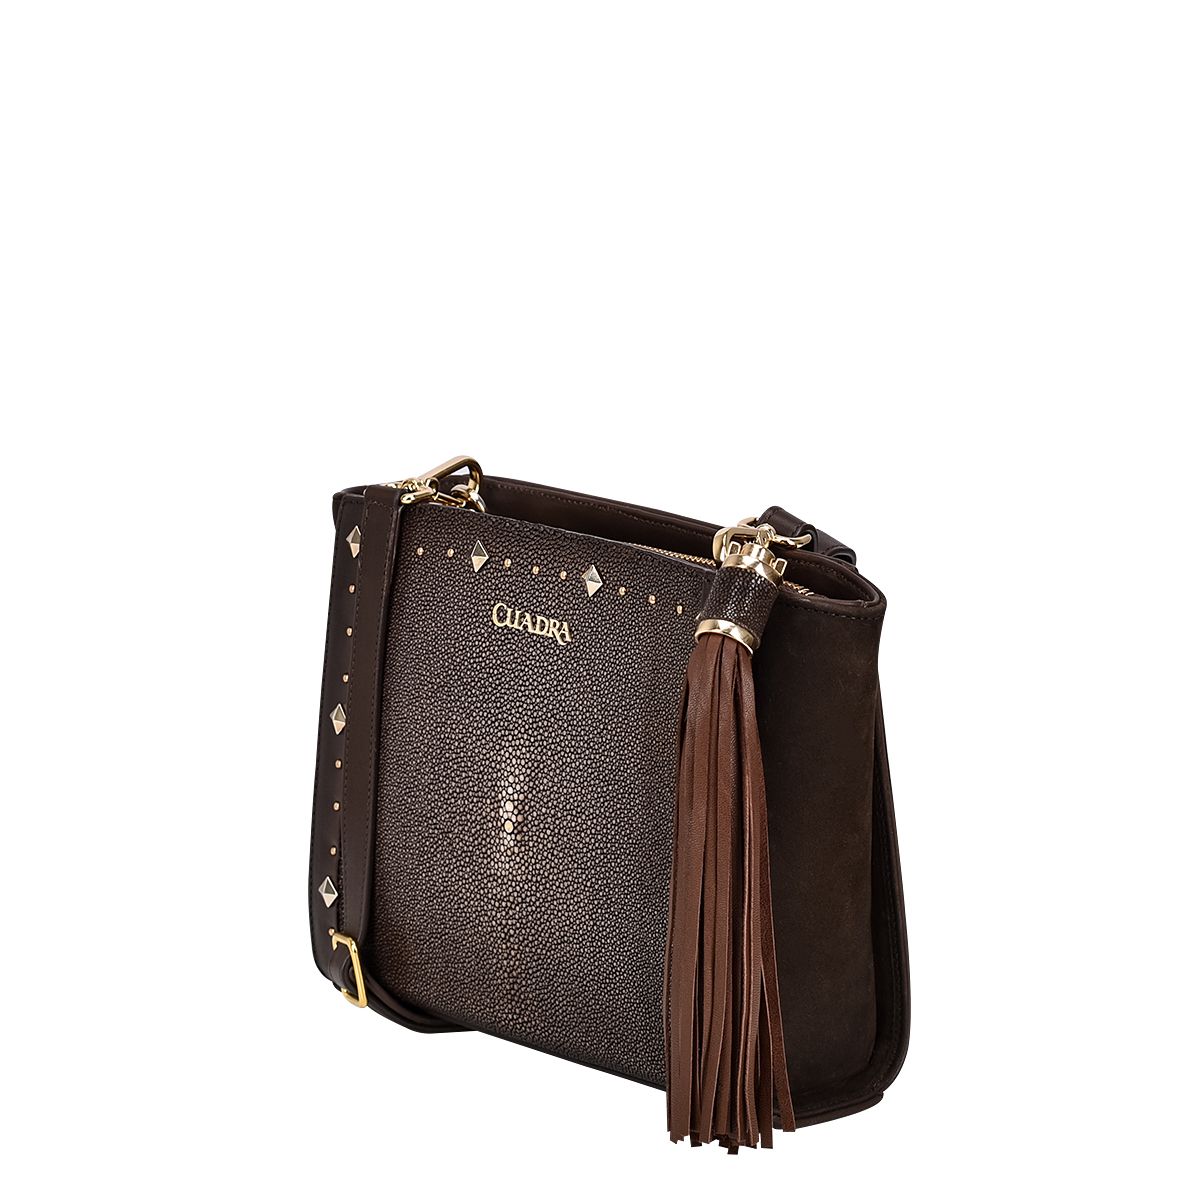 BOD30MA - Cuadra chocolate casual fashion stingray shoulder bag for women-Kuet.us